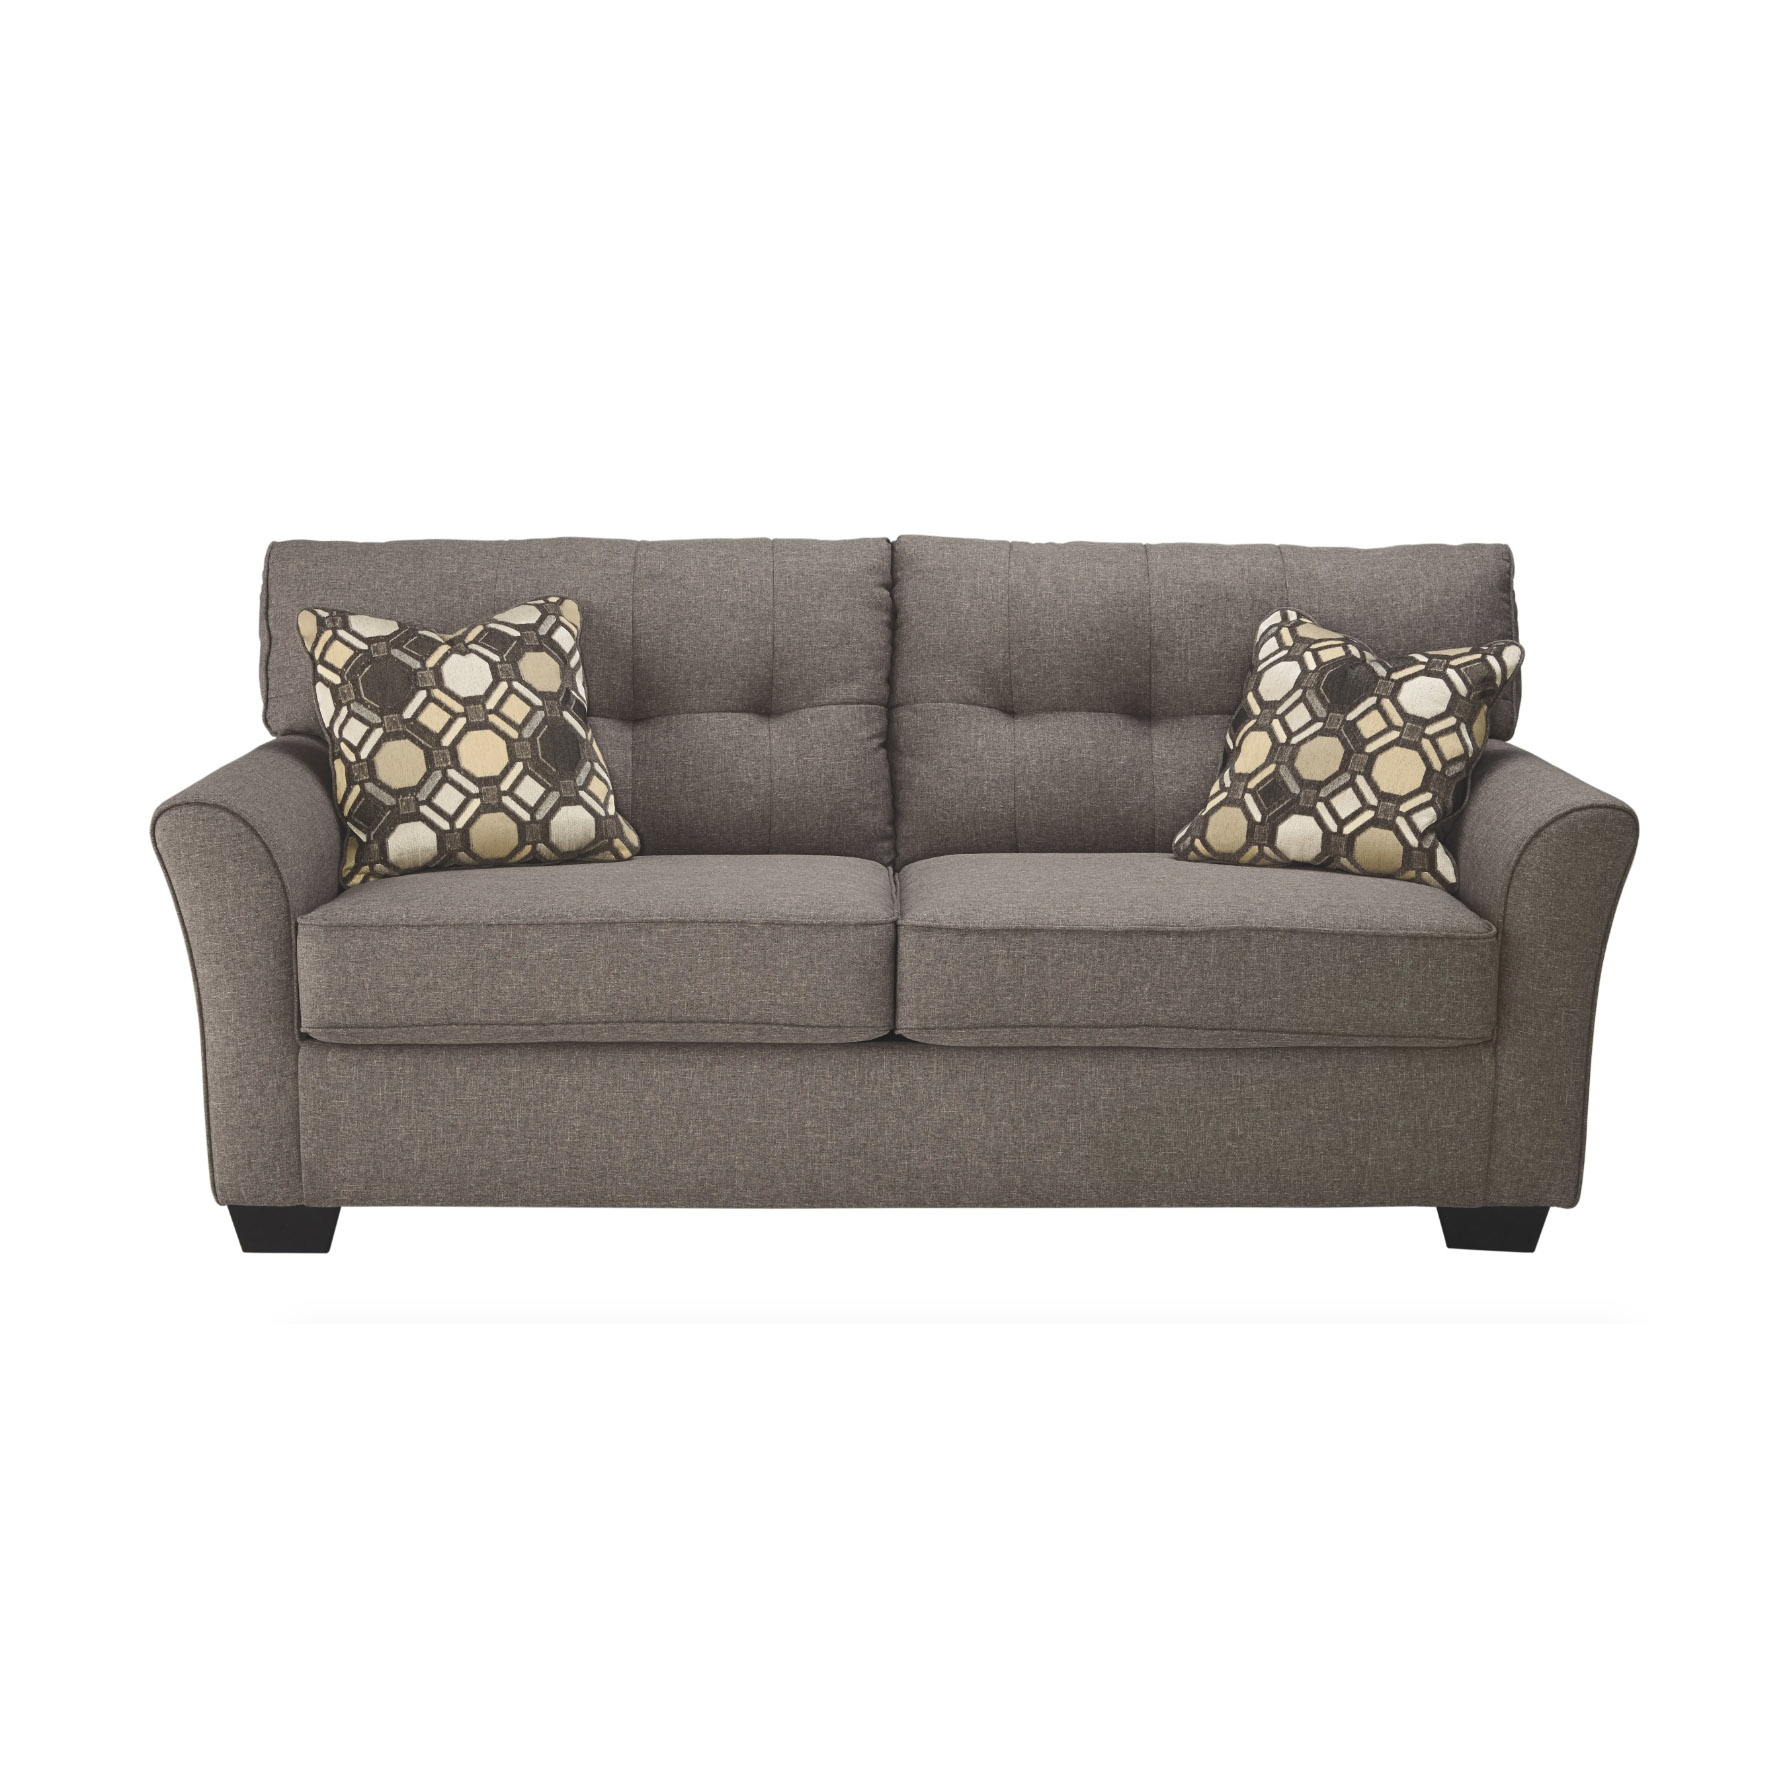 Tibbee Slate Sofa Petes Furniture Company